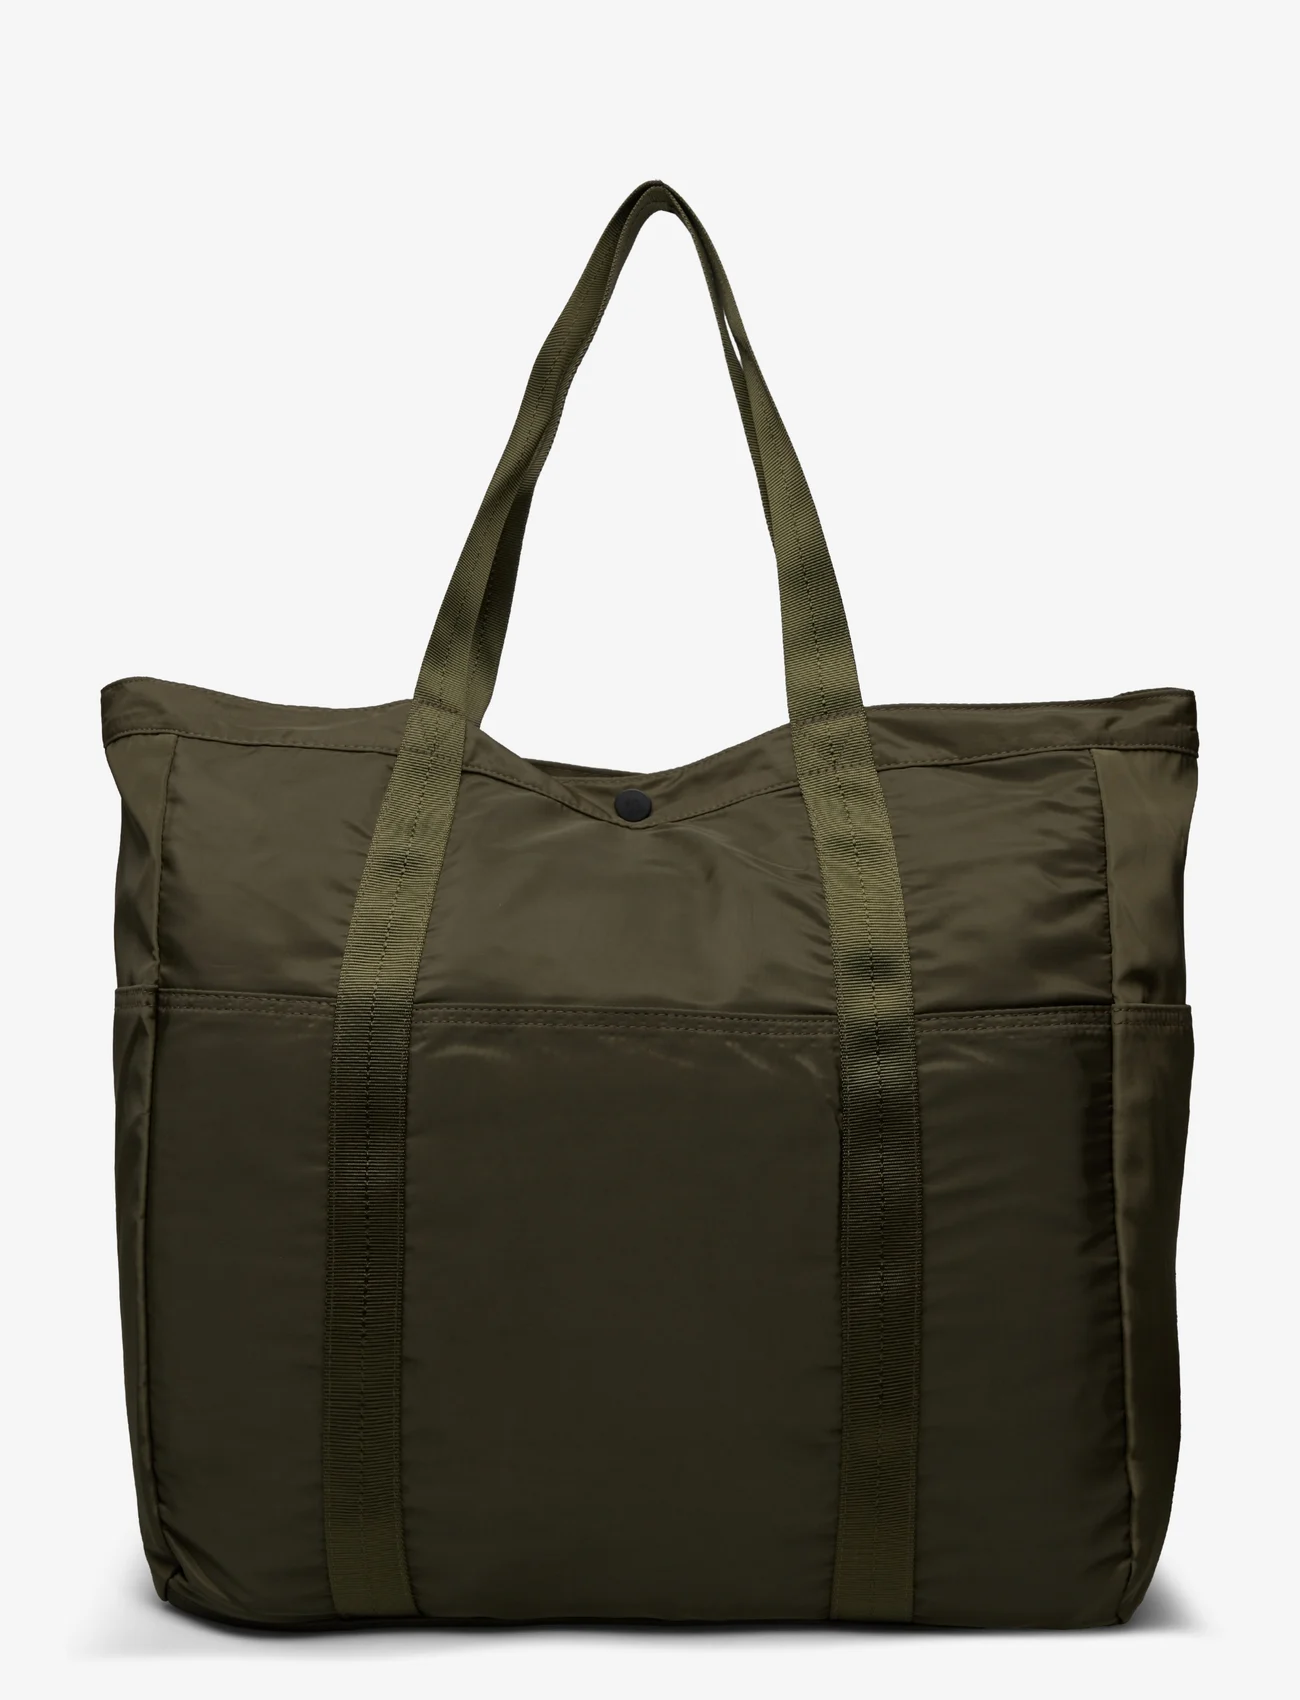 Taikan - Sherpa - handlenett & tote bags - olive - 0